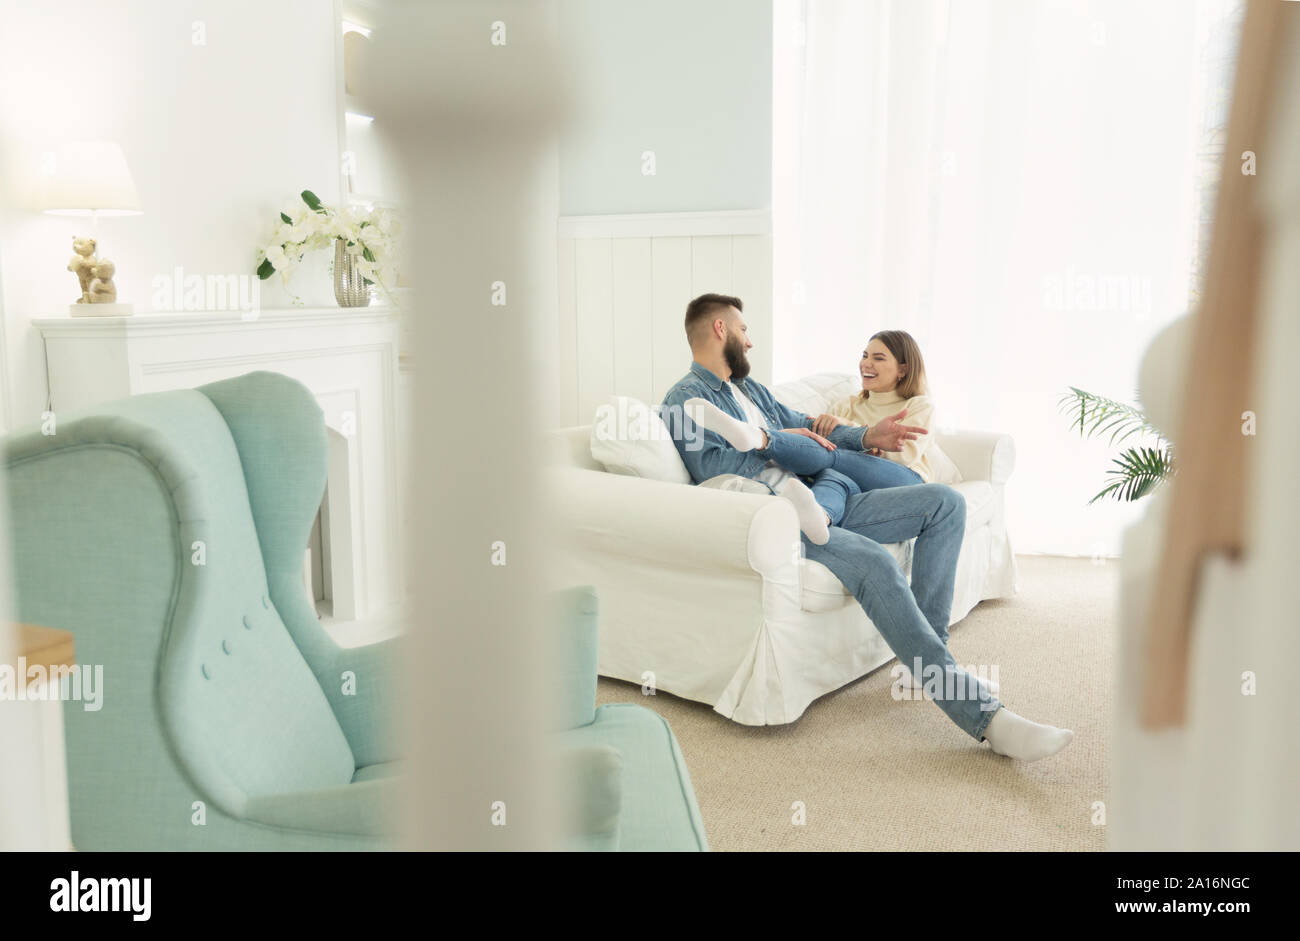 Love story. Happy couple sitting on sofa, in light interior room Stock Photo